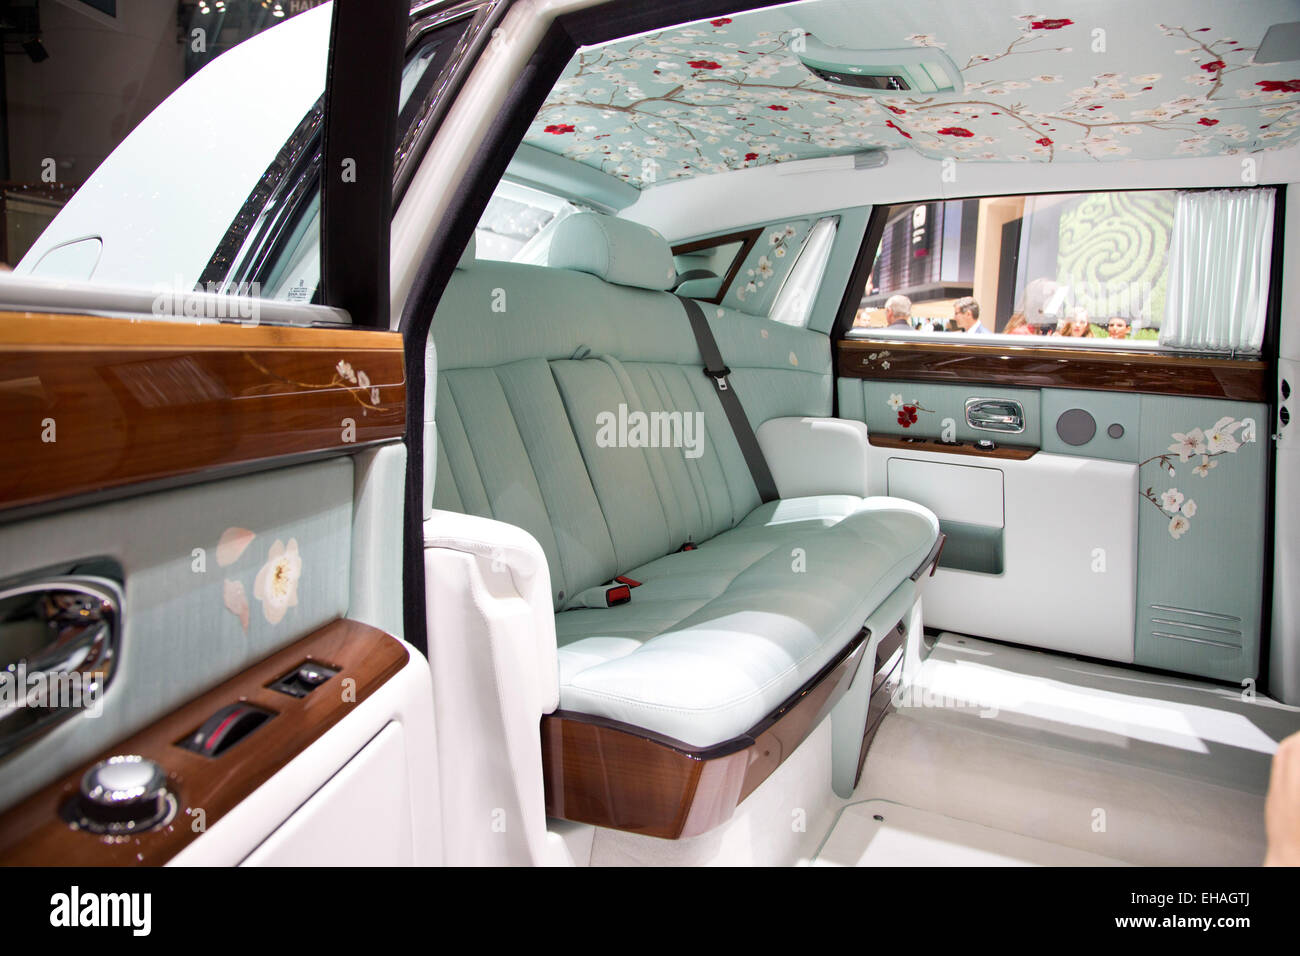 Rolls Royce Phantom Gelassenheit Interieur auf dem Genfer Autosalon 2015  Stockfotografie - Alamy